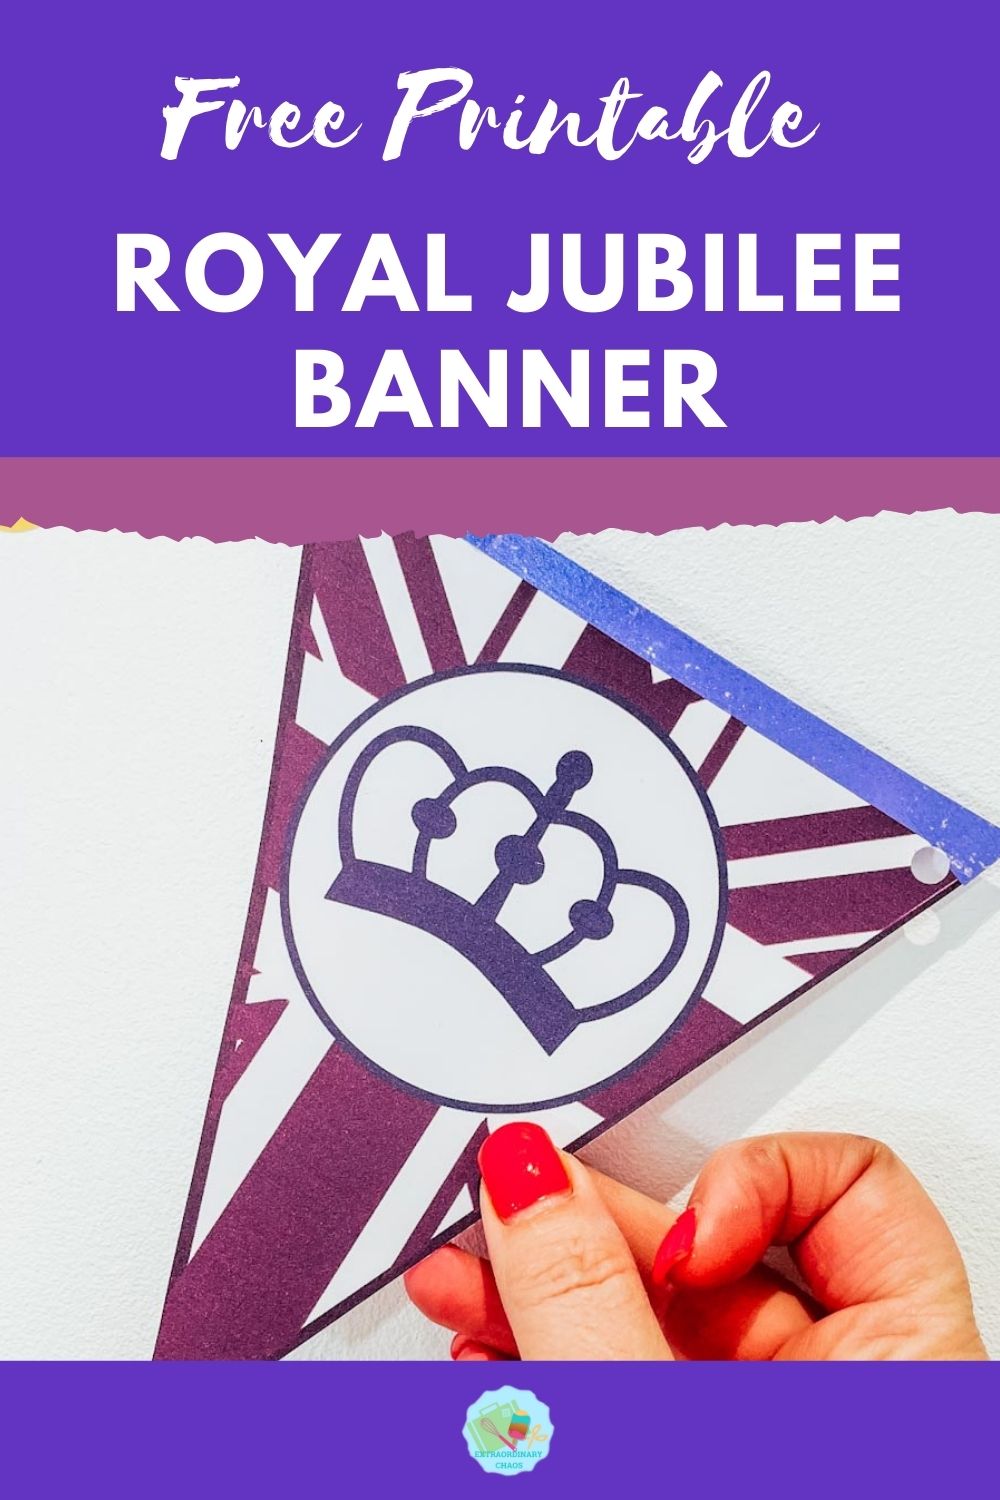 Free Printable Royal Jubilee Banner